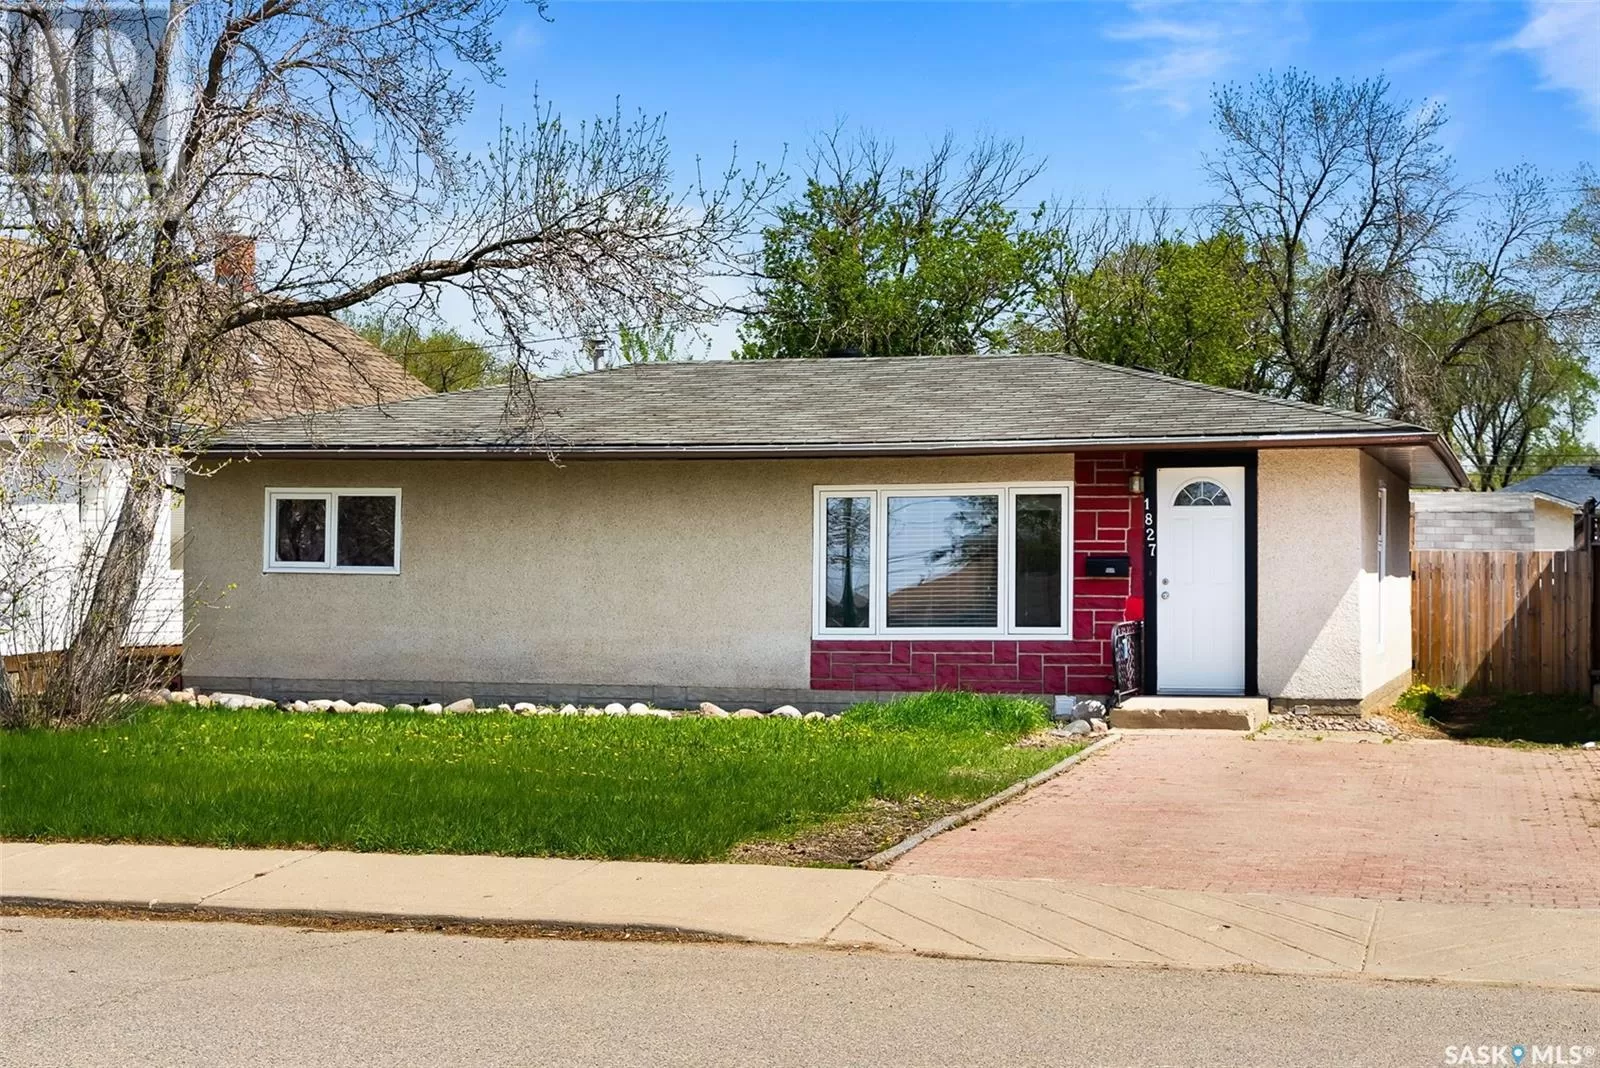 House for rent: 1827 Rupert Street, Regina, Saskatchewan S4N 1W6